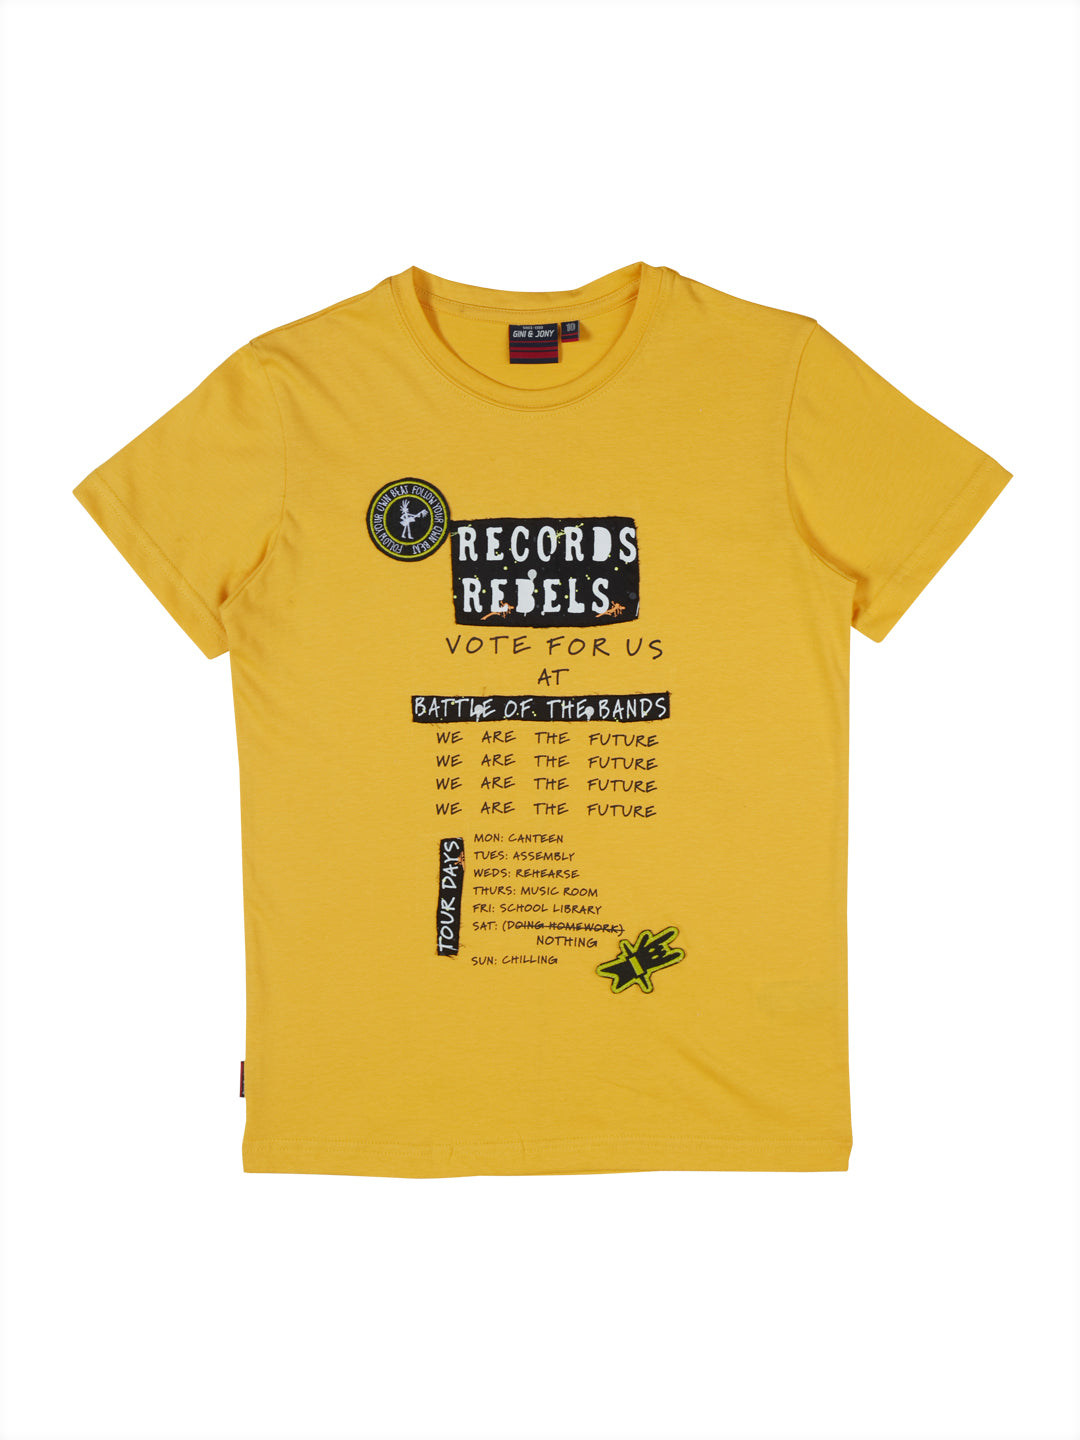 Boys Yellow Printed Cotton T-Shirt